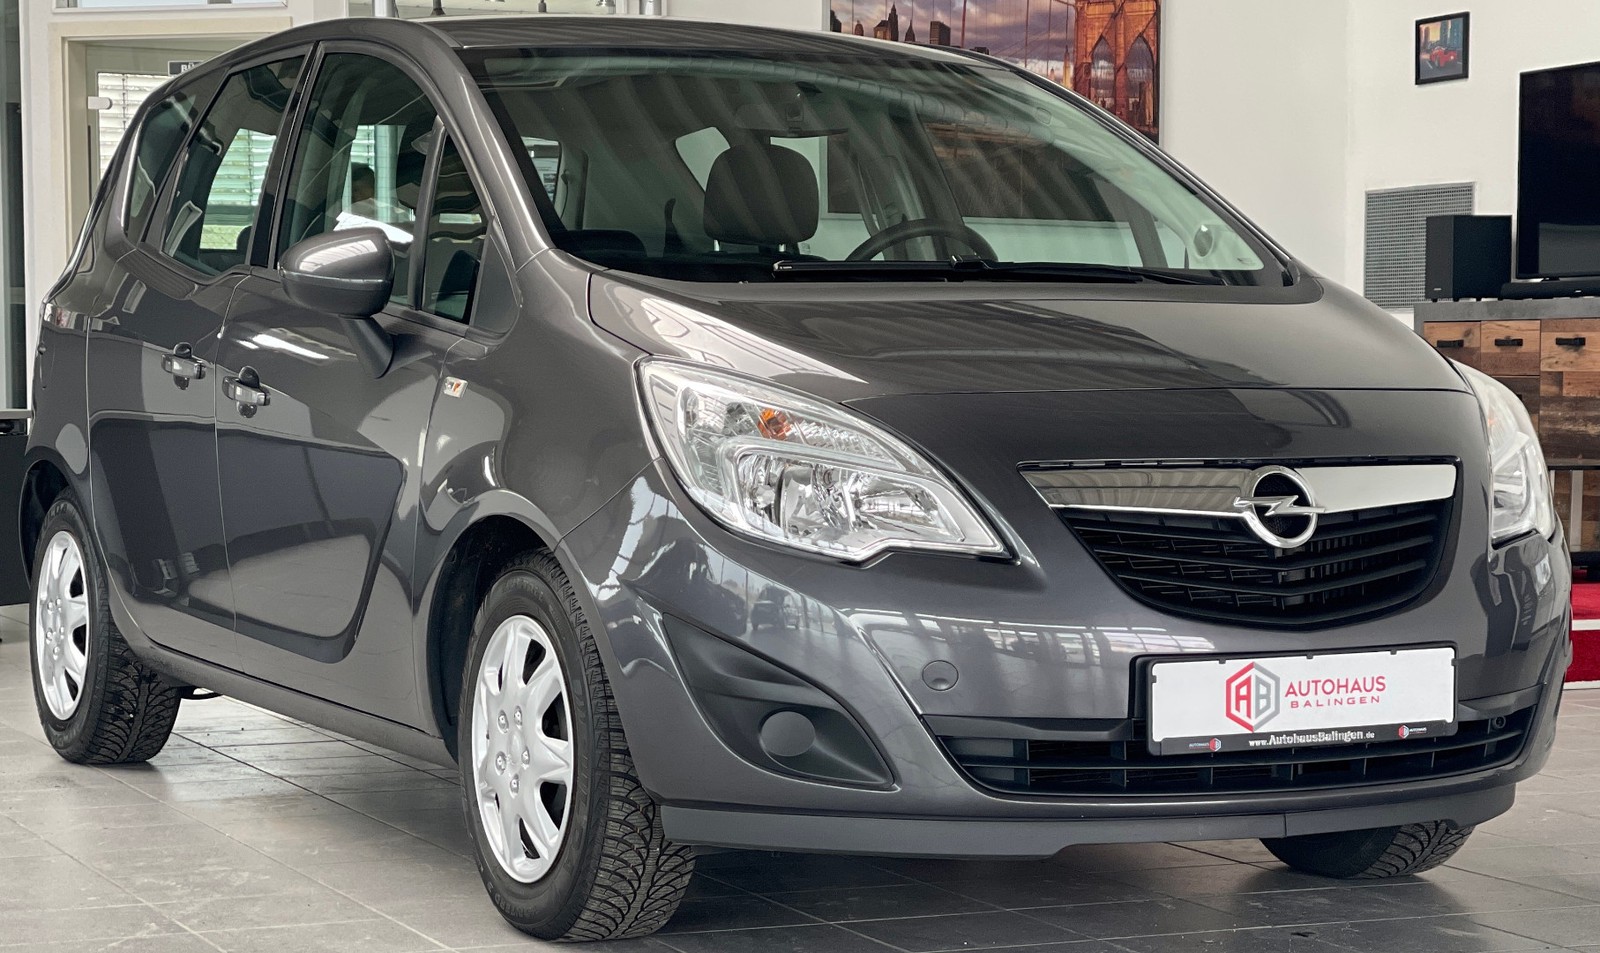 Opel Meriva B gebraucht kaufen in Balingen Preis 6090 eur - Int.Nr